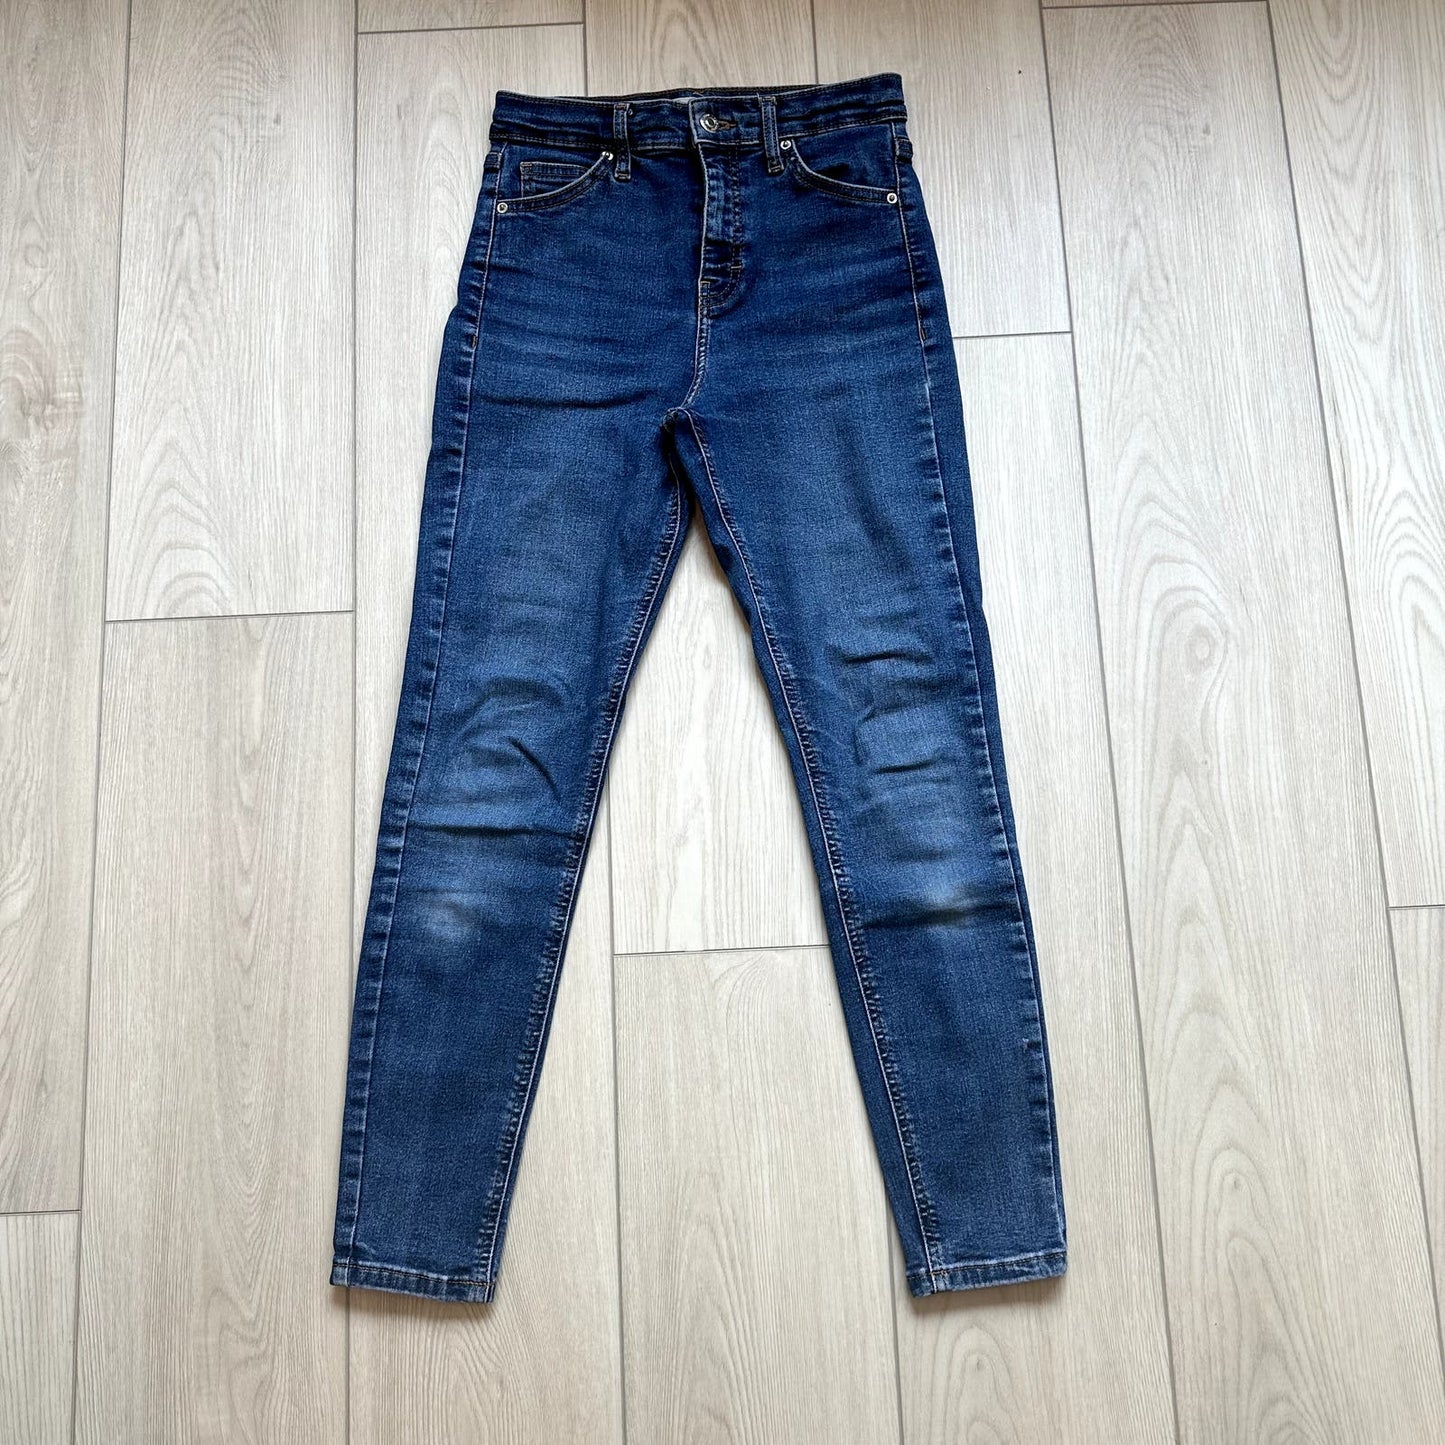 Topshop Jamie medium wash high waisted skinny jeans jeggings